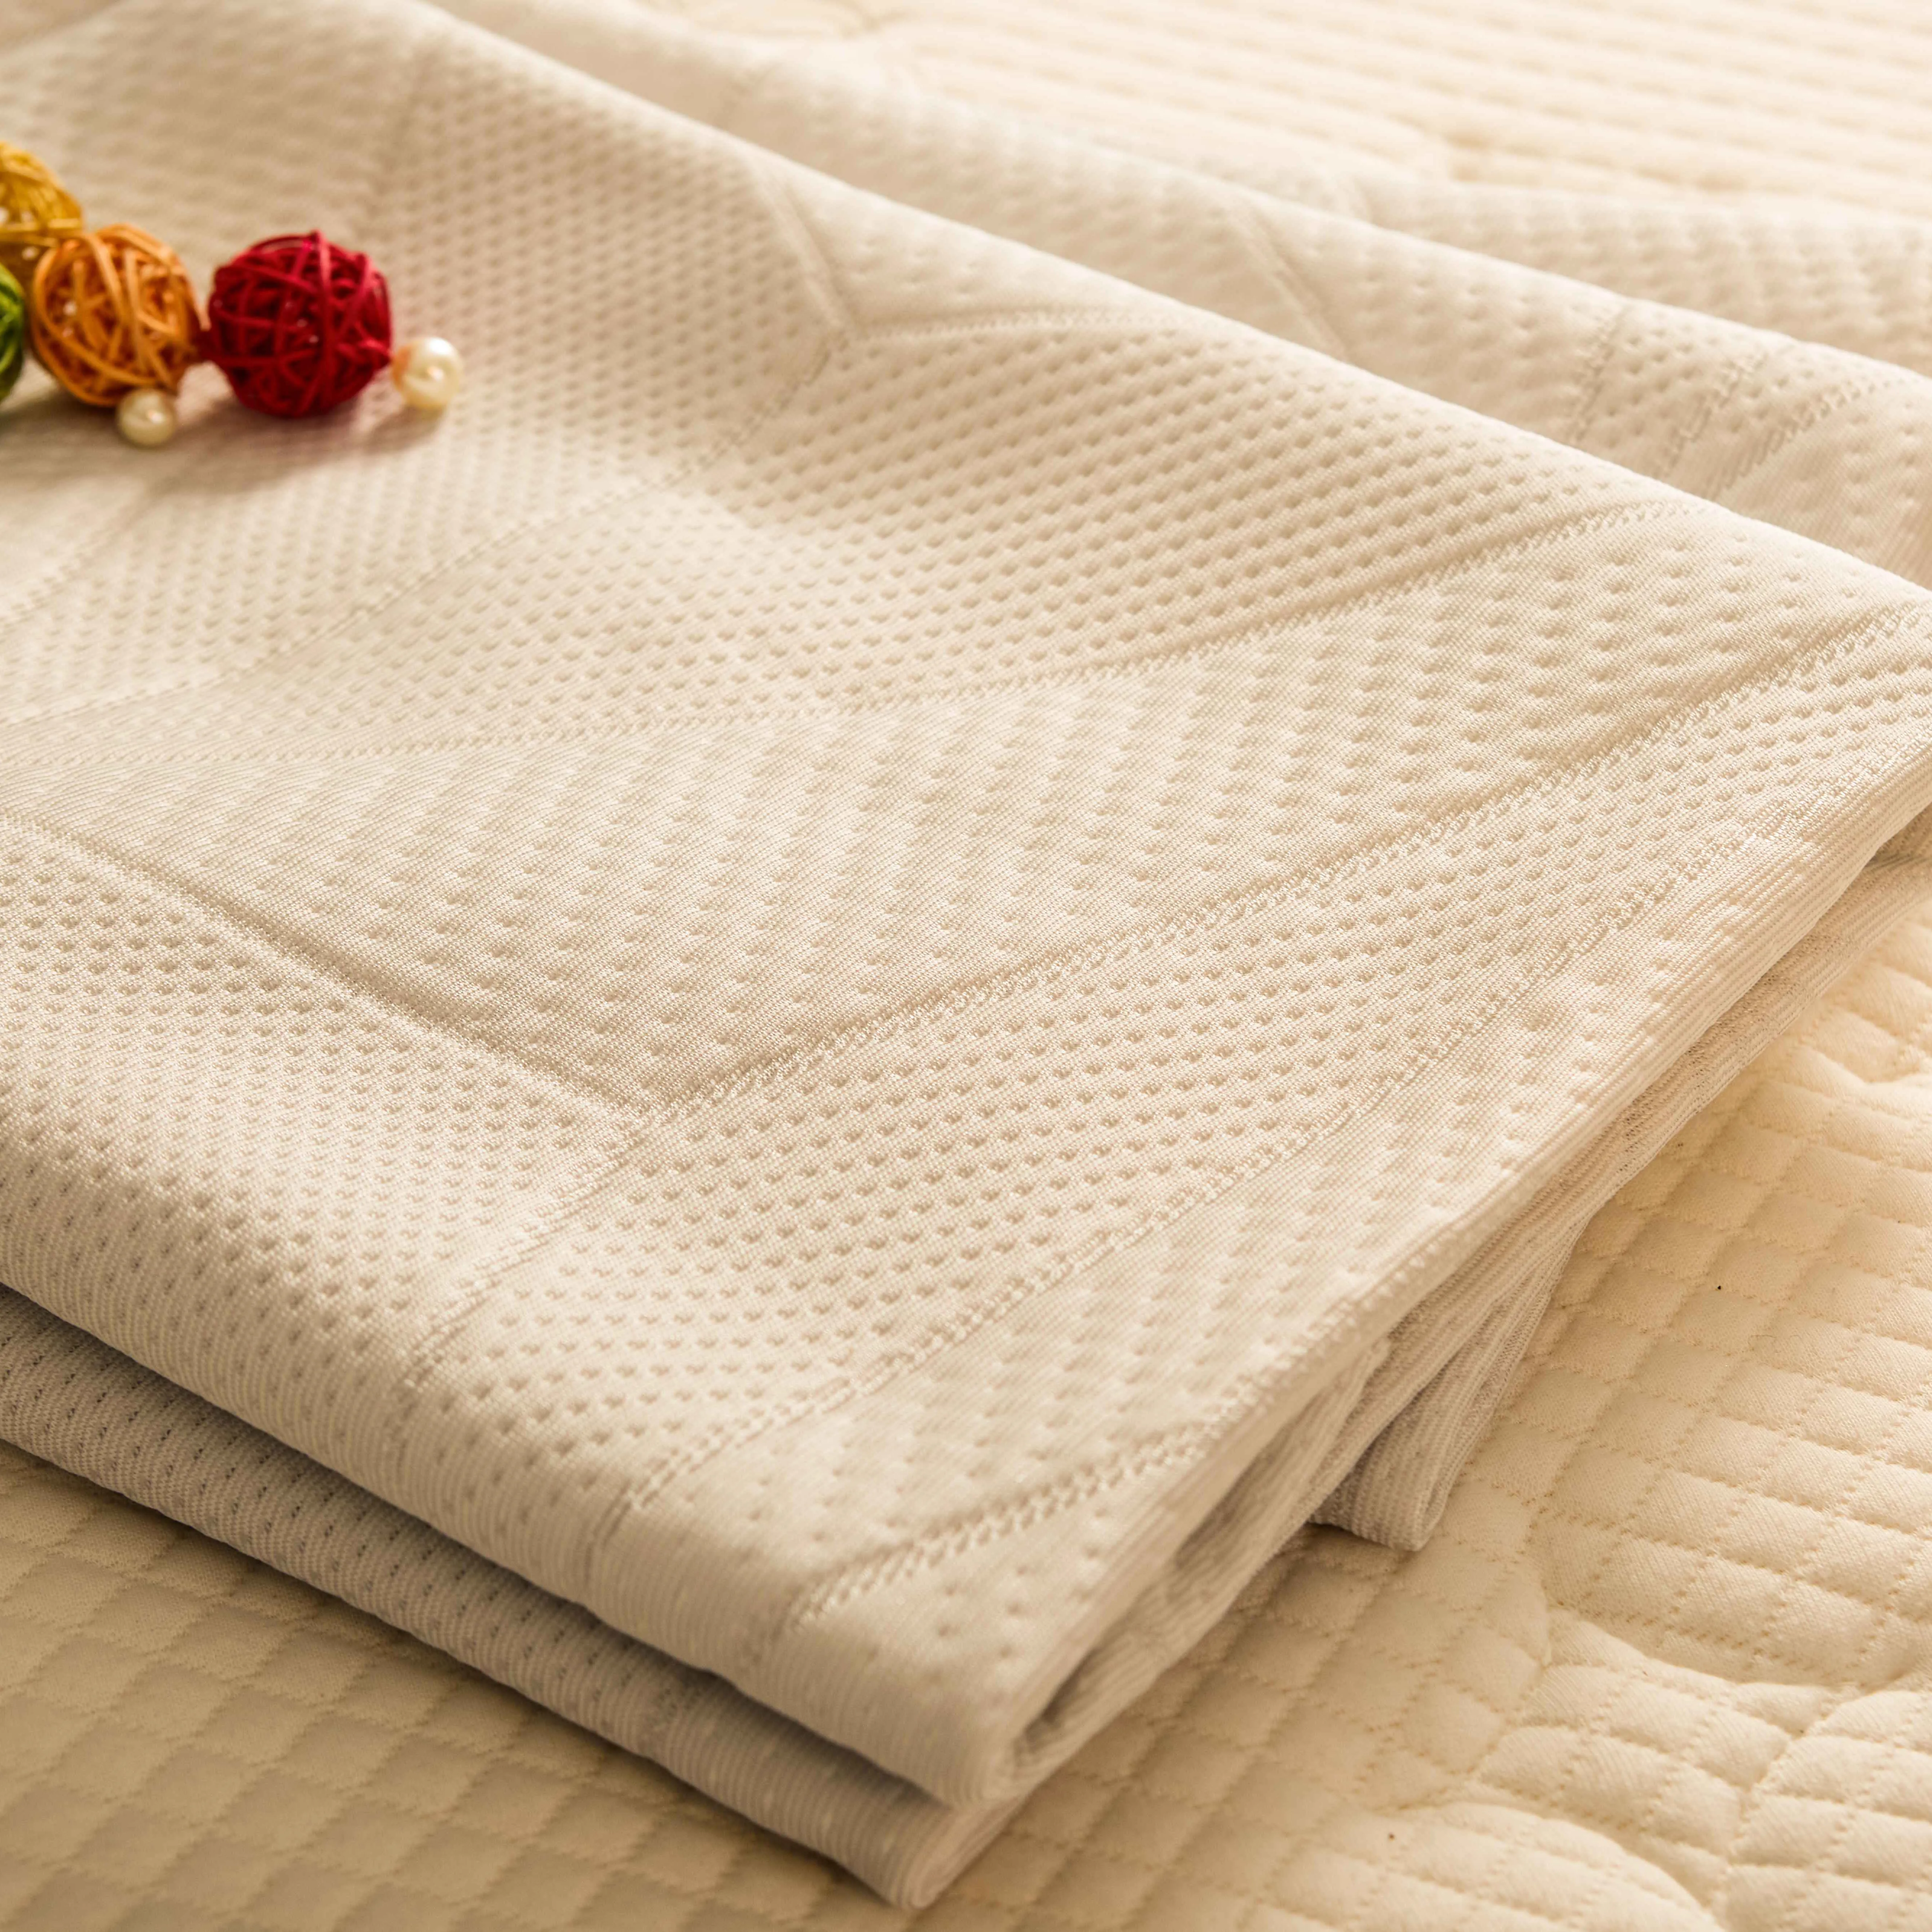 100% Witte Jacquard Katoen Gebreid Polyester Matrasstof Voor Matrashoes